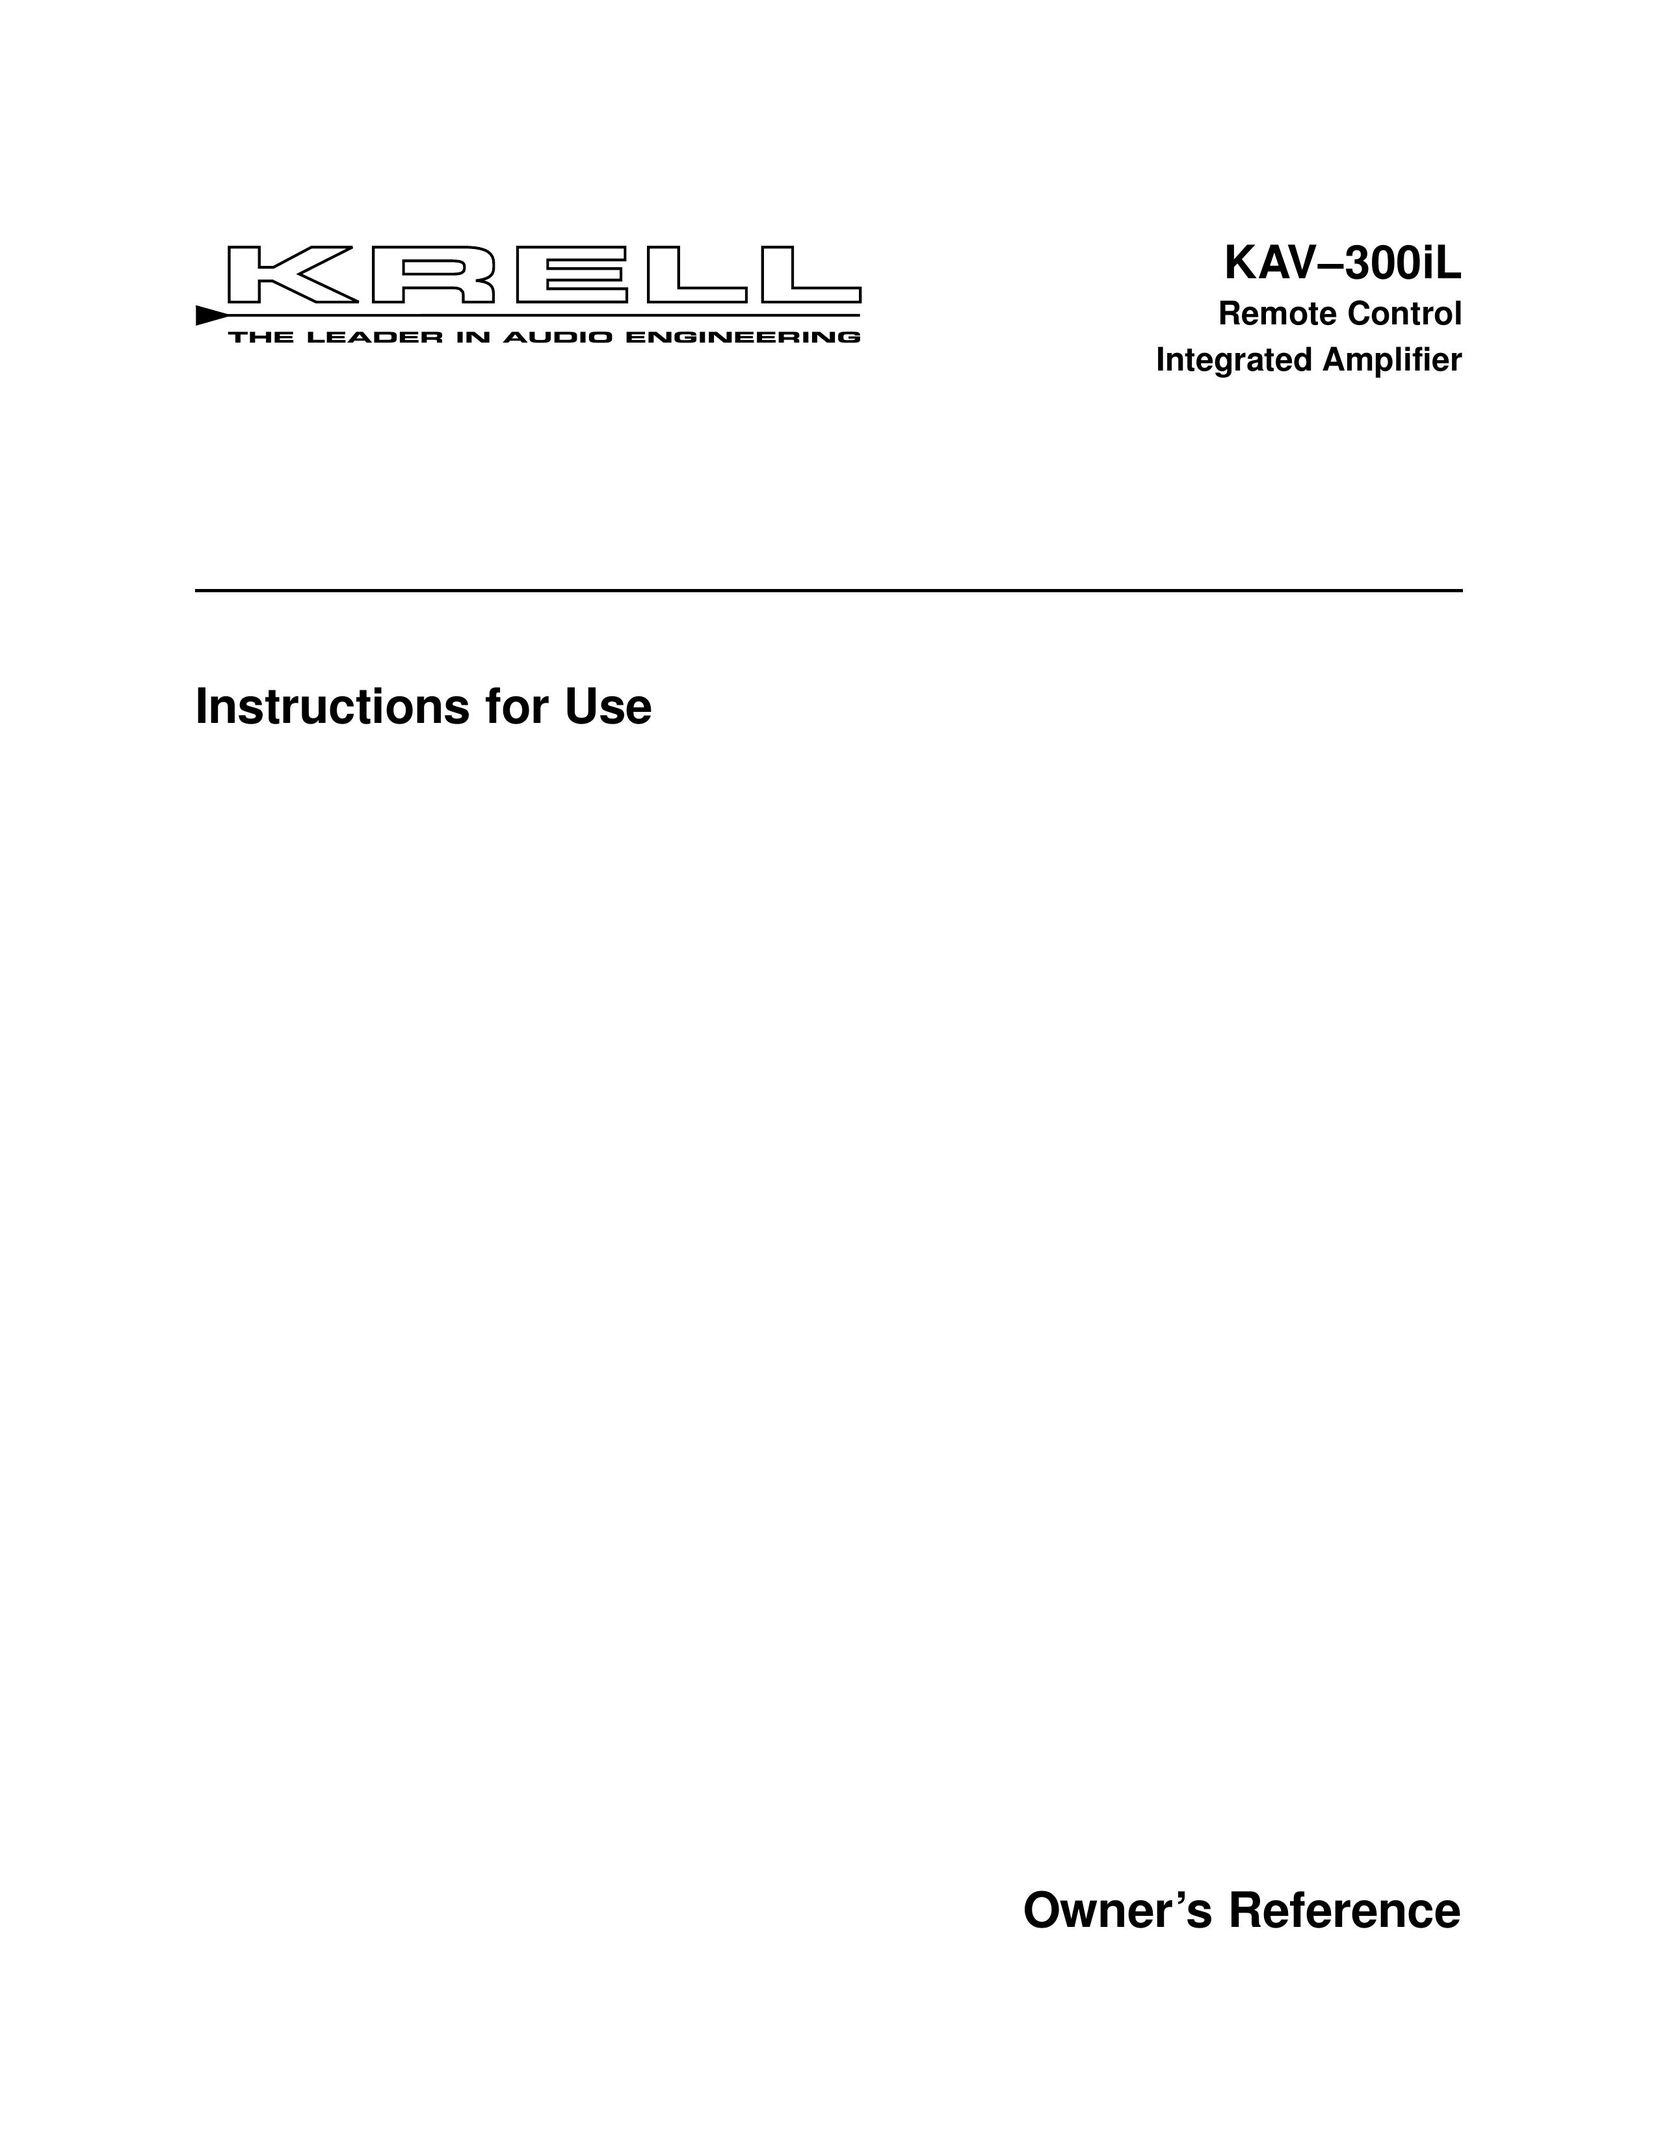 Krell Industries KAV-300IL Car Amplifier User Manual